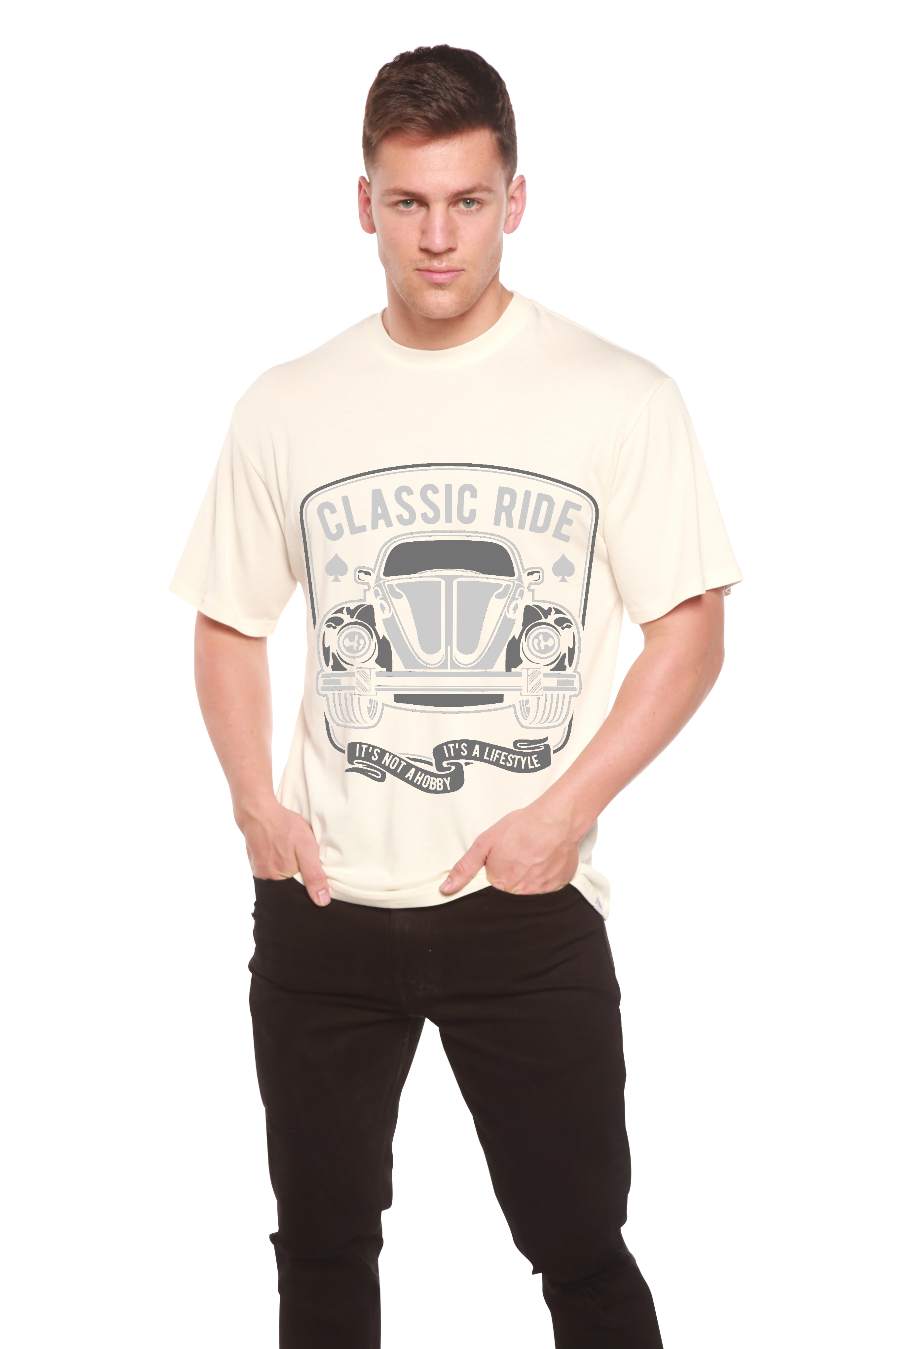 Classic Ride Men's Bamboo Viscose/Organic Cotton Short Sleeve T-Shirt - Spun Bamboo